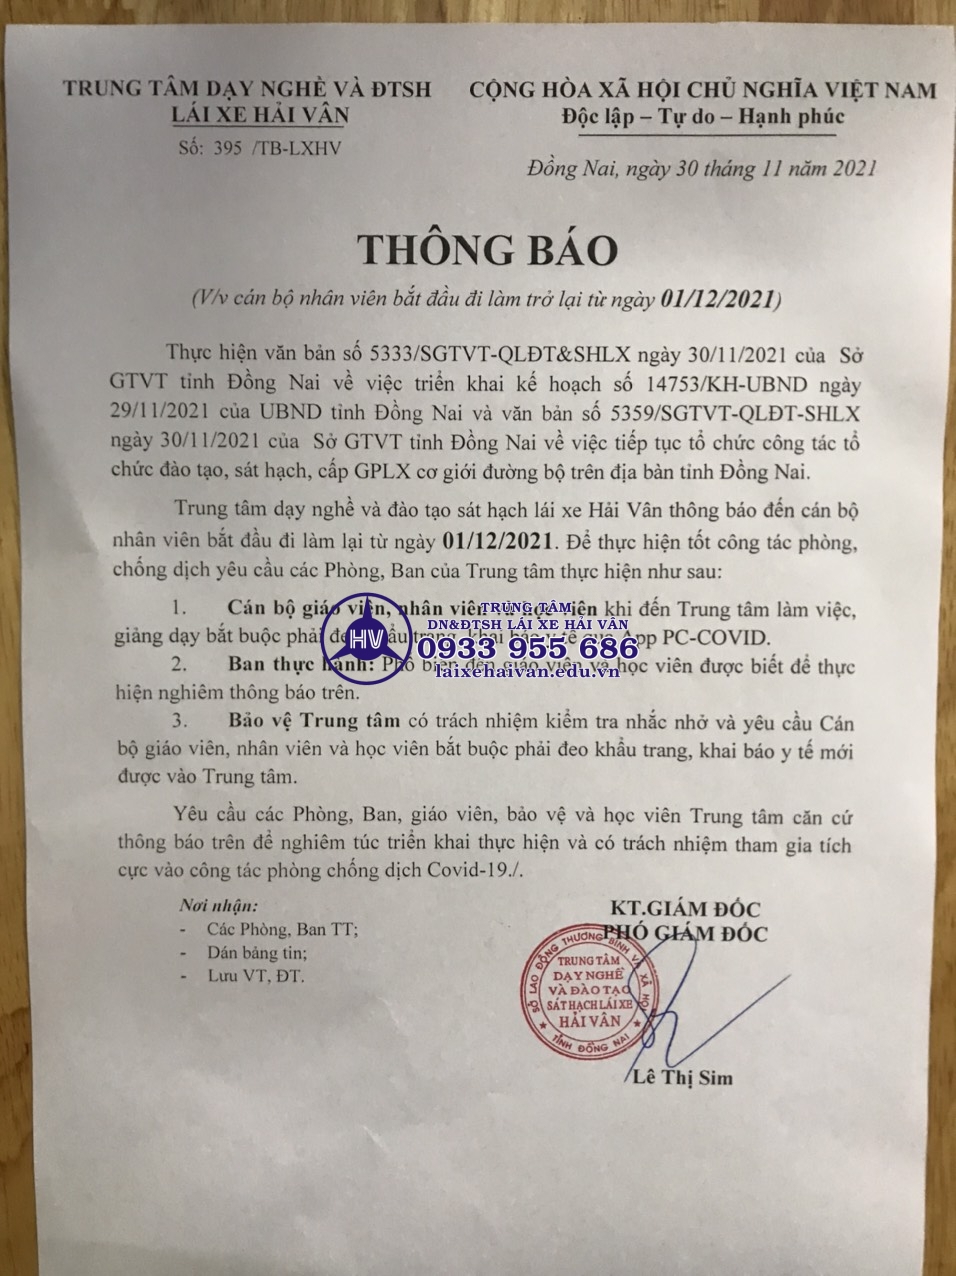 THONG BAO 2 - laixehaivan.edu.vn